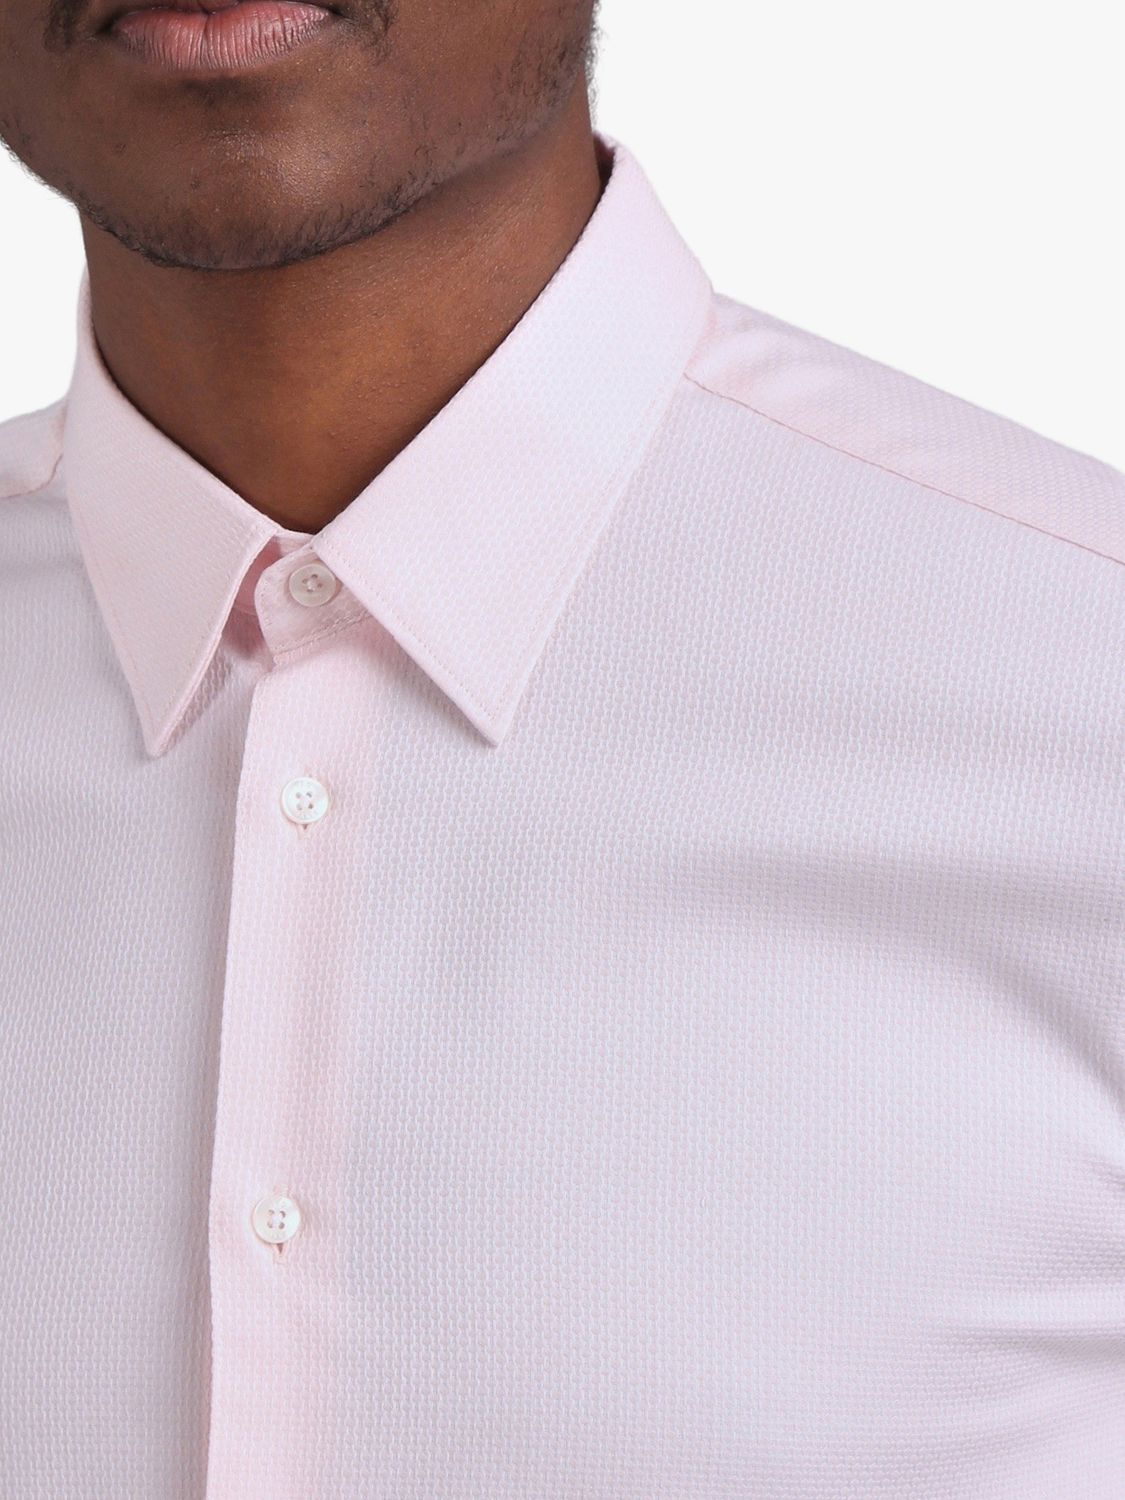 Ted Baker Dorian Long Sleeve Slim Fit Shirt, Pink, 16.5R